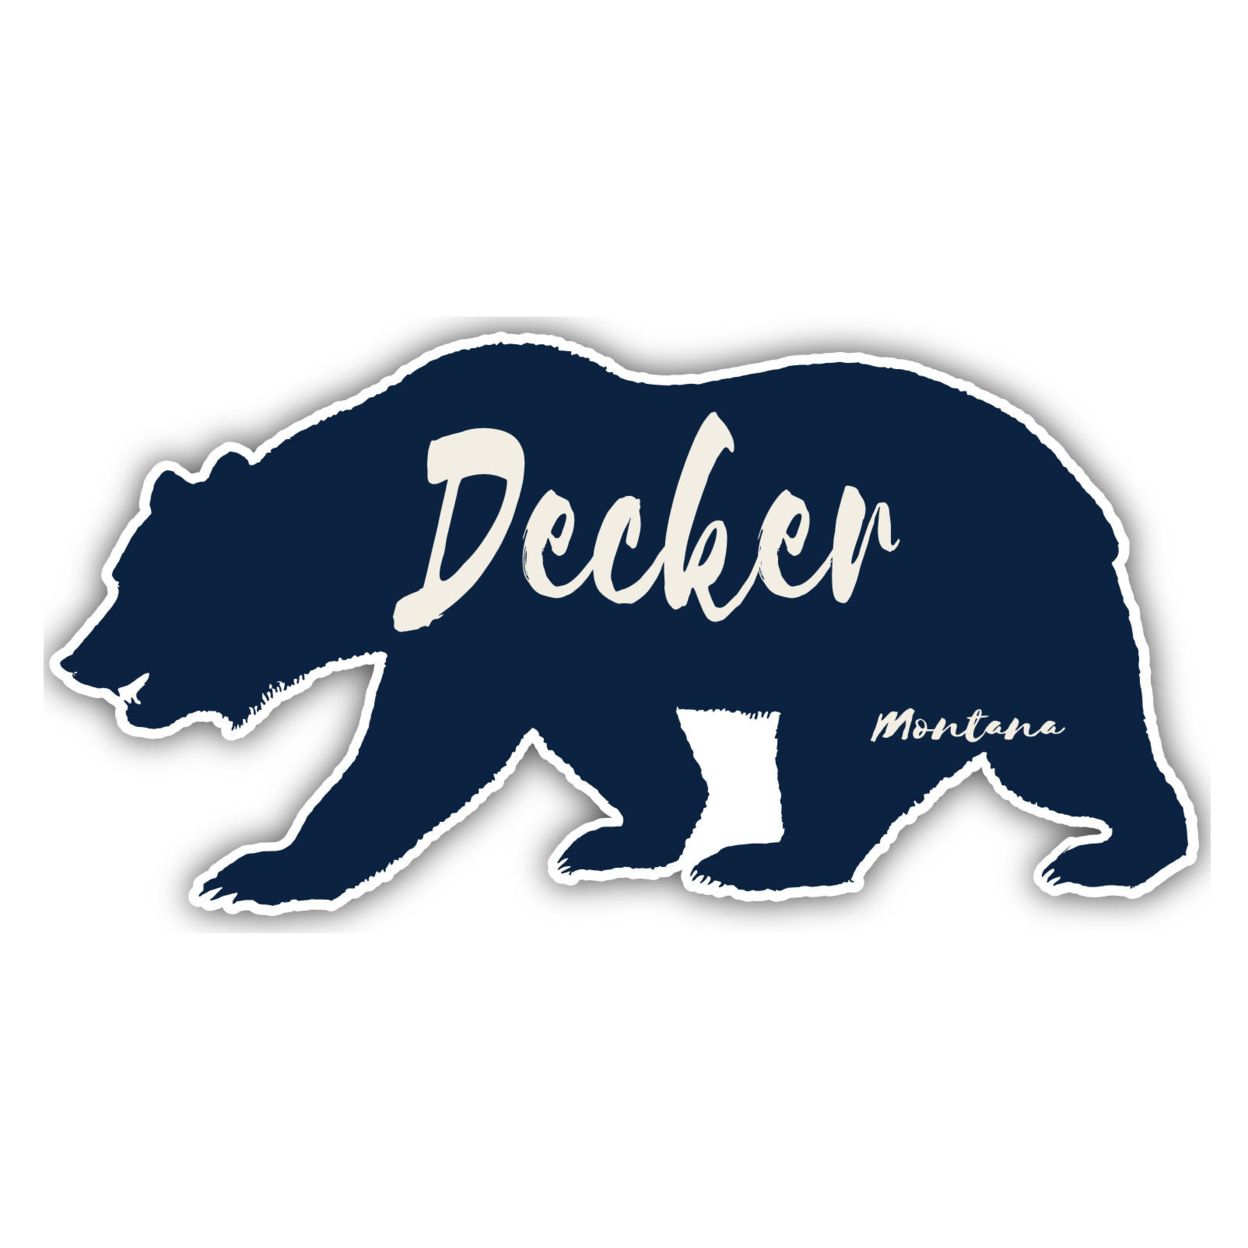 Decker Montana Souvenir Decorative Stickers (Choose Theme And Size) - Single Unit, 4-Inch, Bear